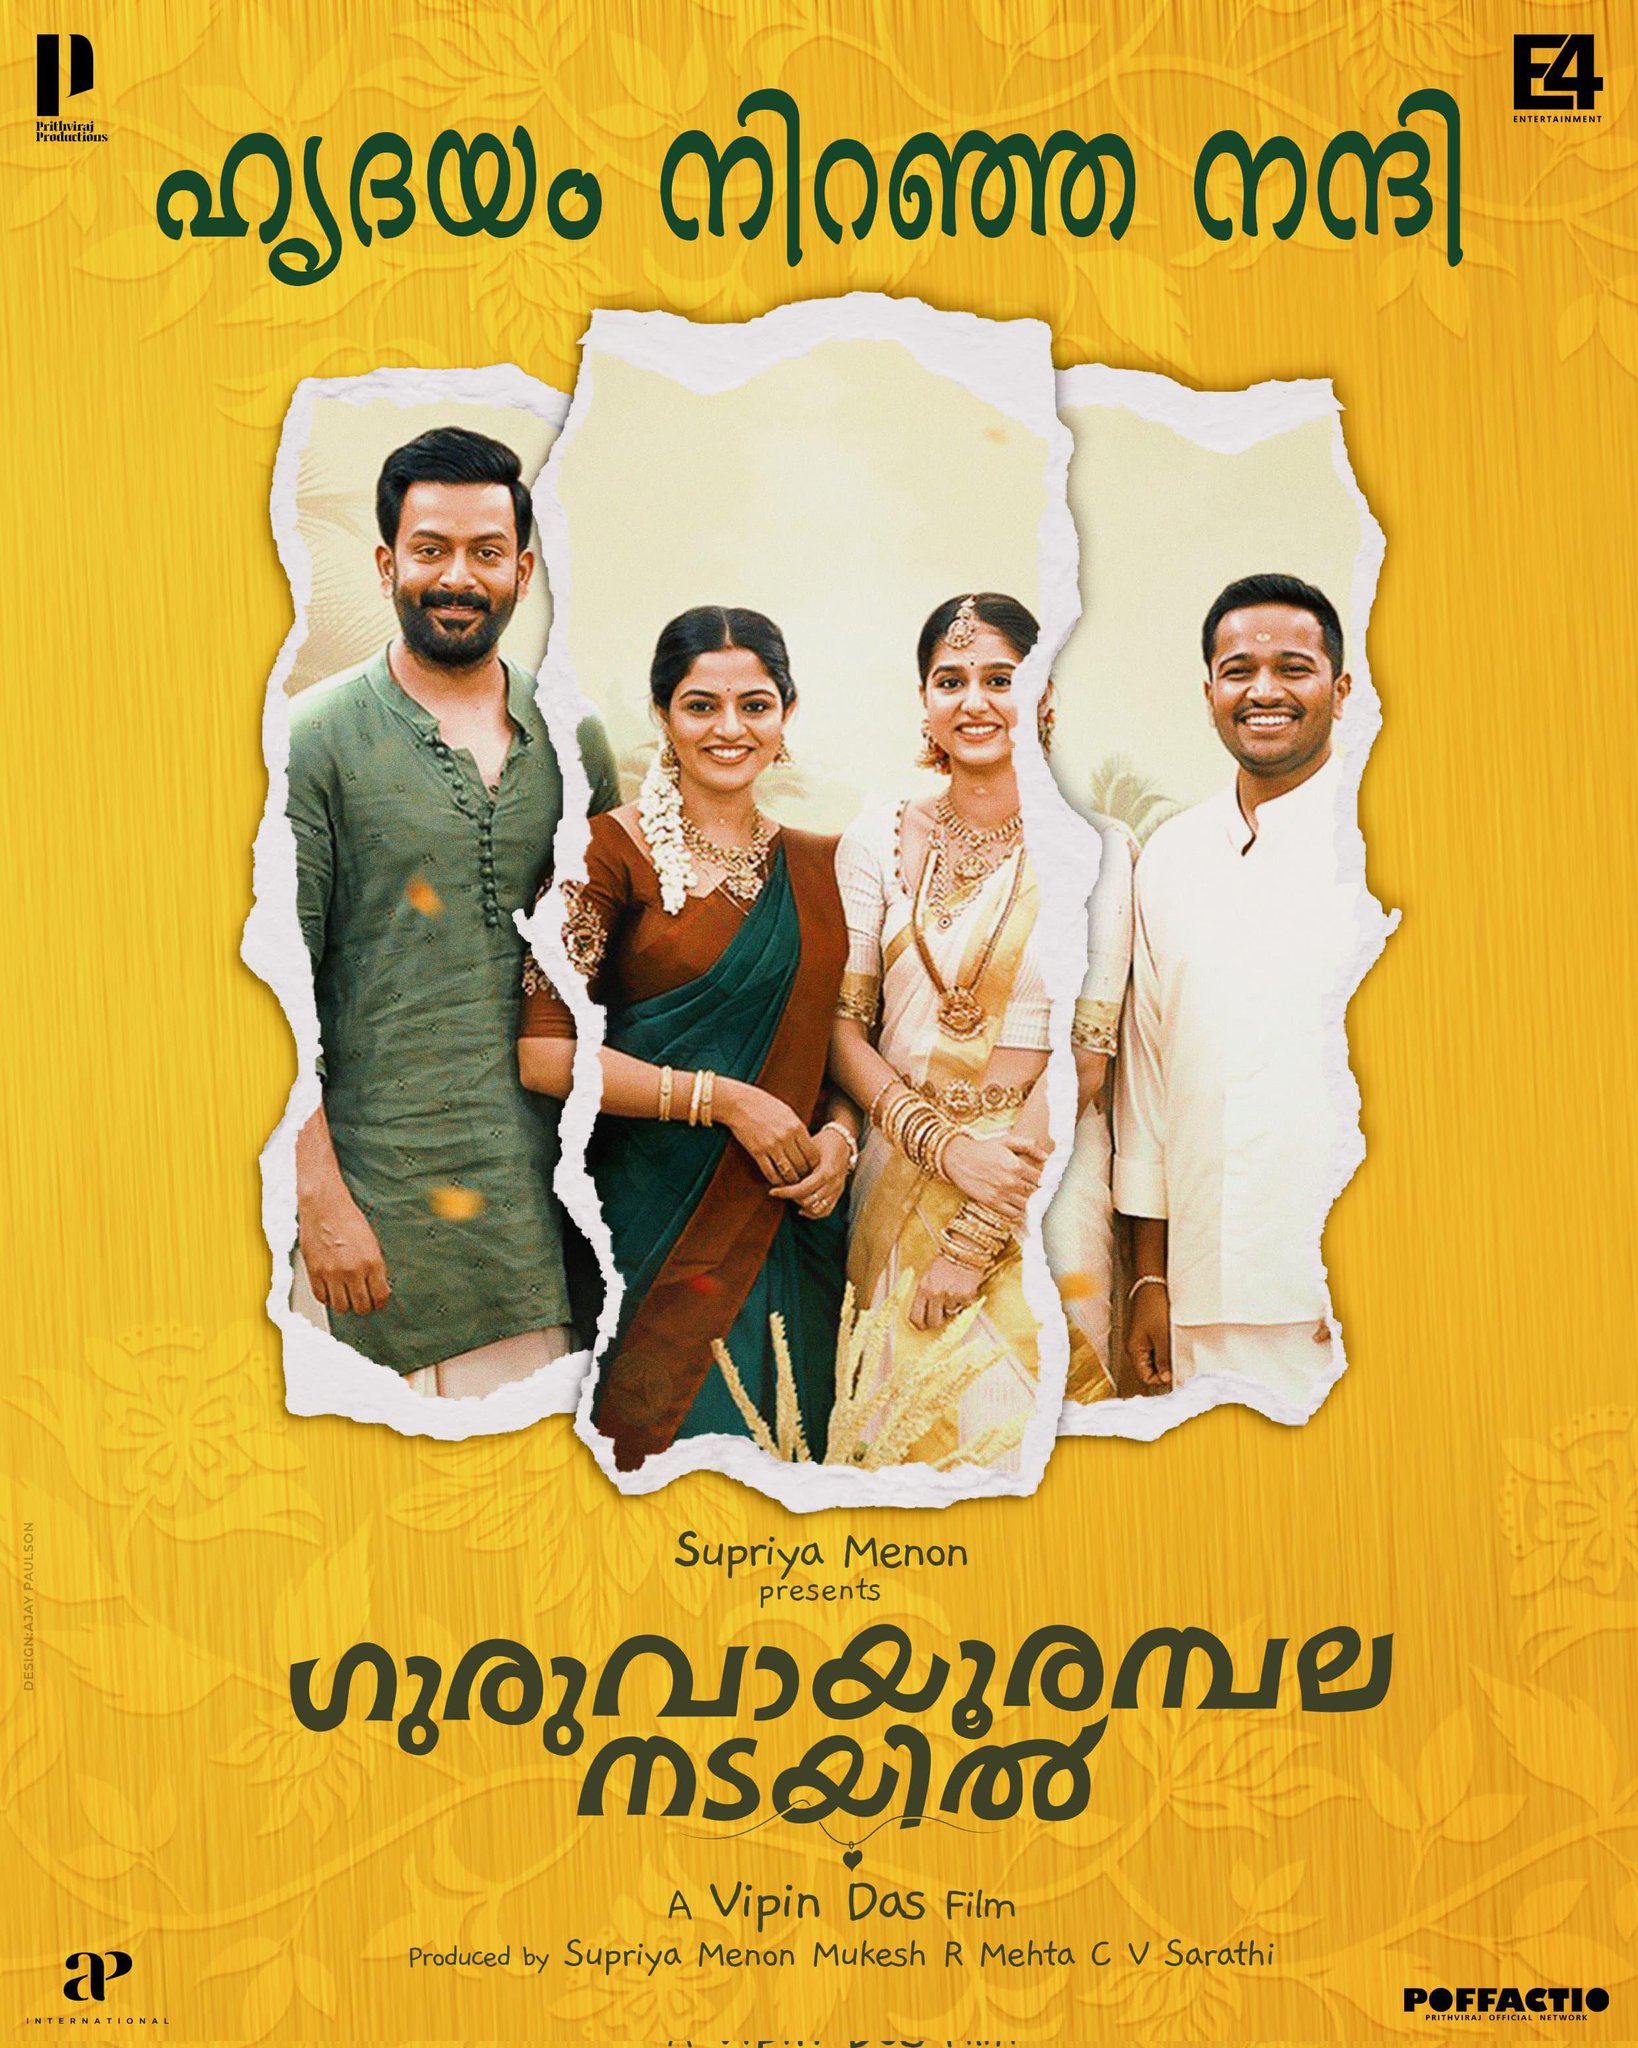 Latest Malayalam Cinema News, Latest Telugu Cinema News, GuruvayoorambalaNadayil 3 Days Kerala Collections, GuruvayoorambalaNadayil 3 Days Boxoffice, Prithviraj Sukumaran Movie Collections,